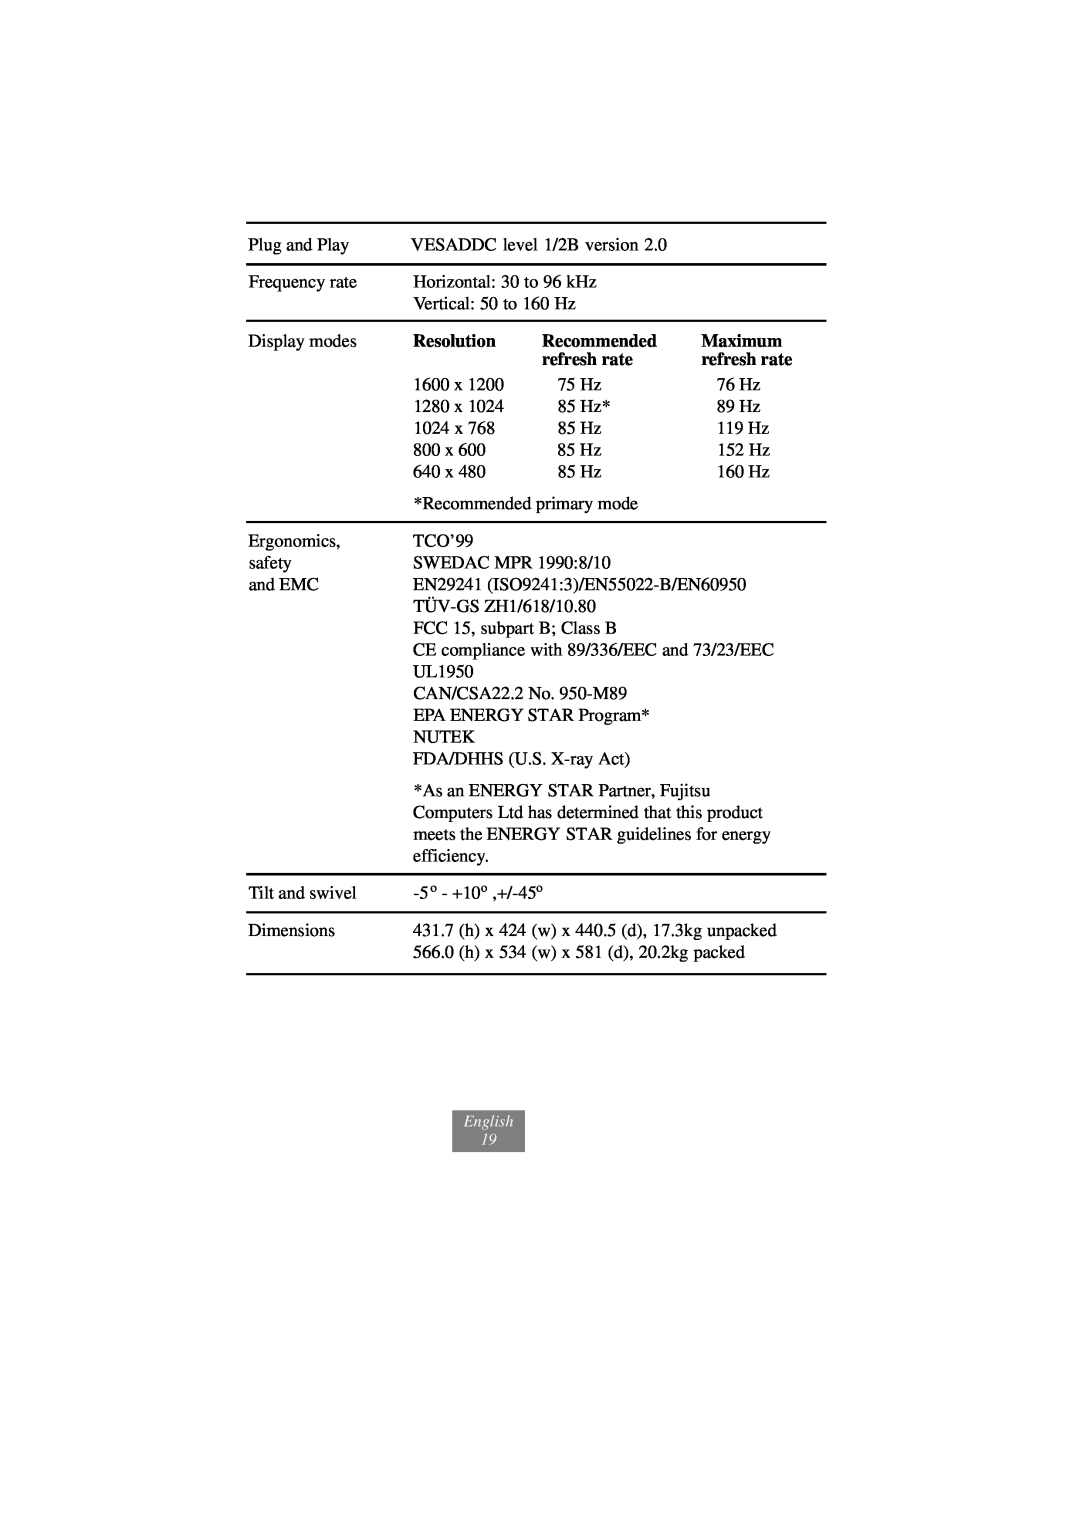 Fujitsu x178 manuel dutilisation Resolution, Recommended, Maximum, refresh rate 